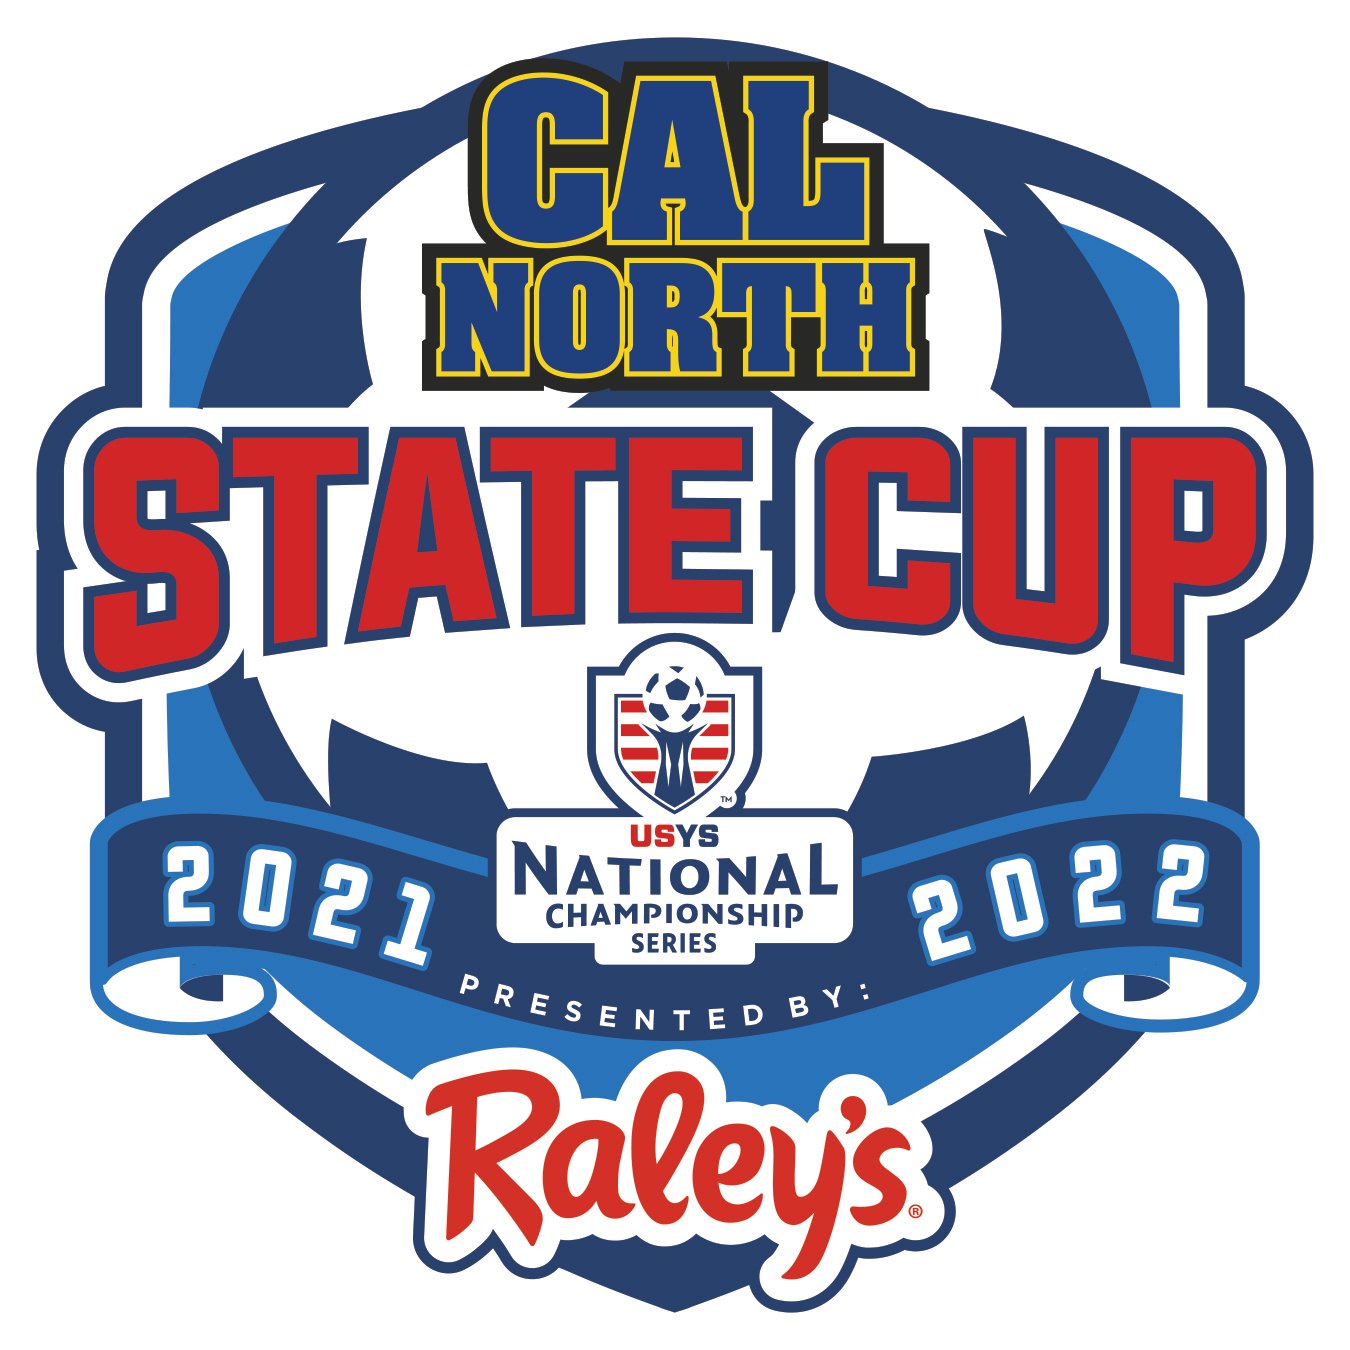 CalNorth-StateCup2021-2022-1